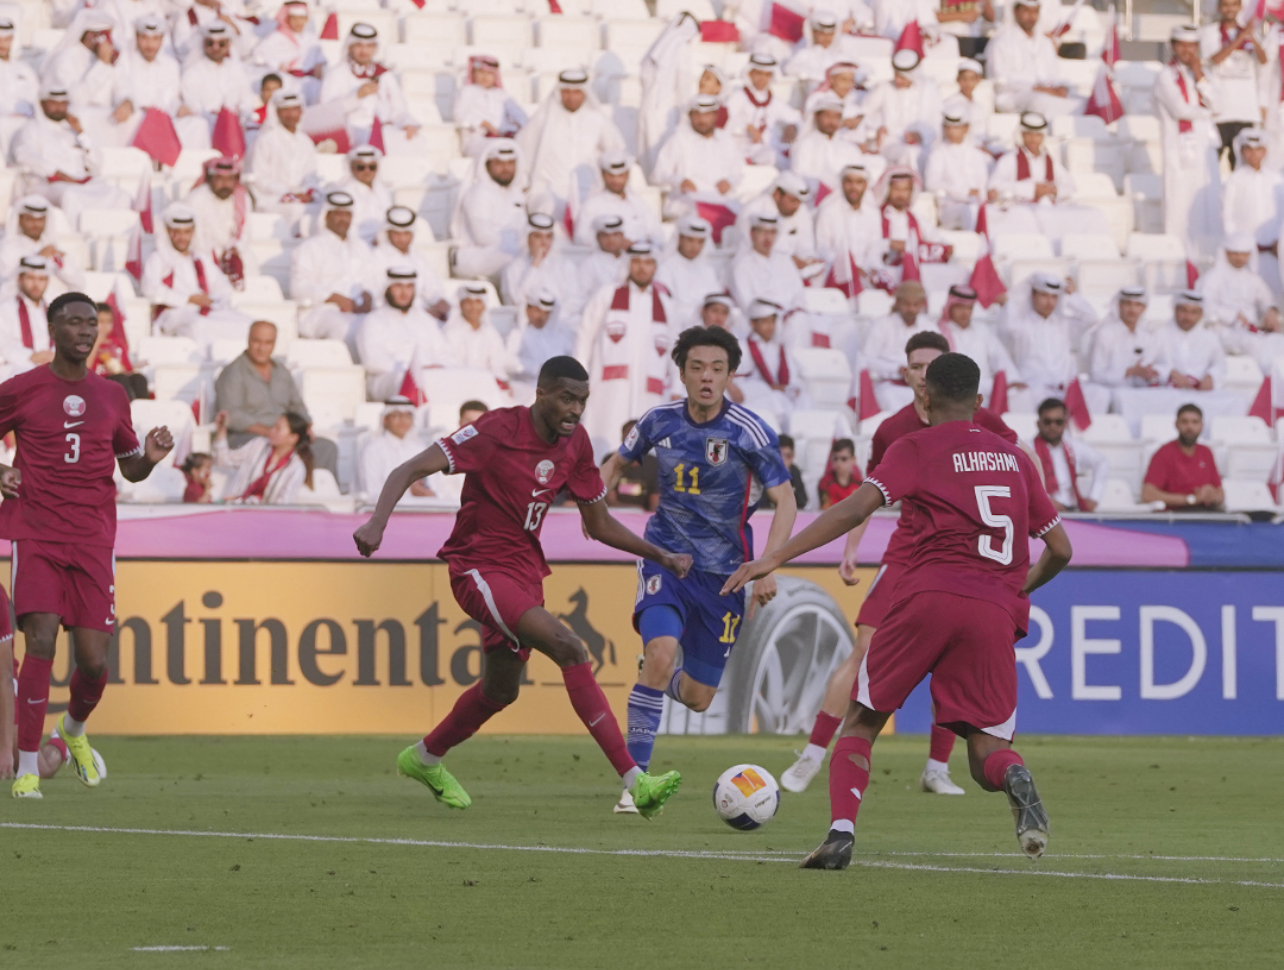 AFC U23 Asian Cup: Qatar’s winning streak ends after loss against Japan